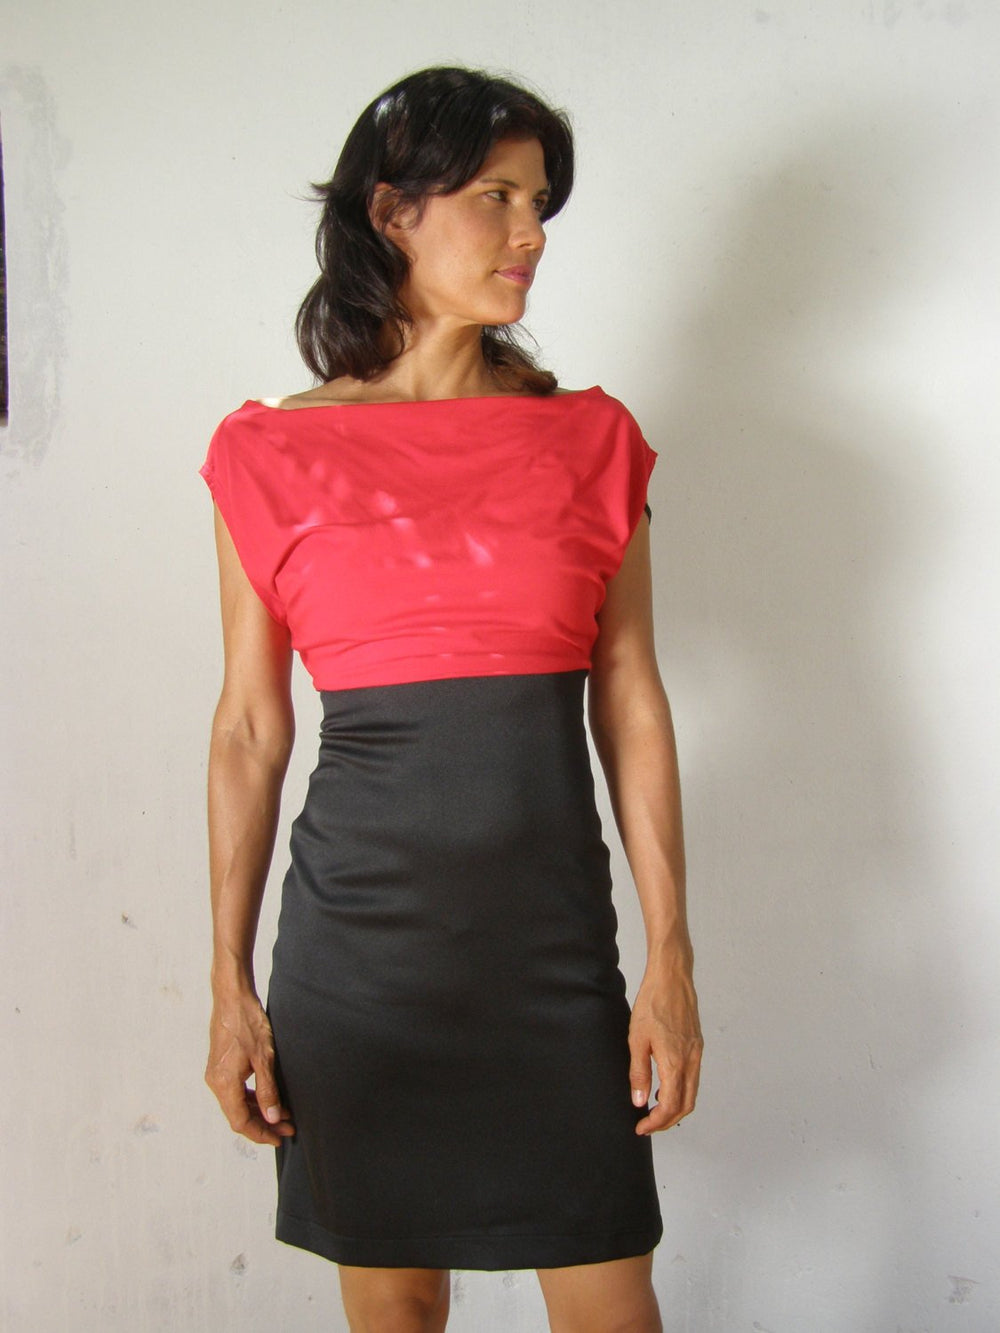 Shihar Super Faltering Chic Mini Dress 